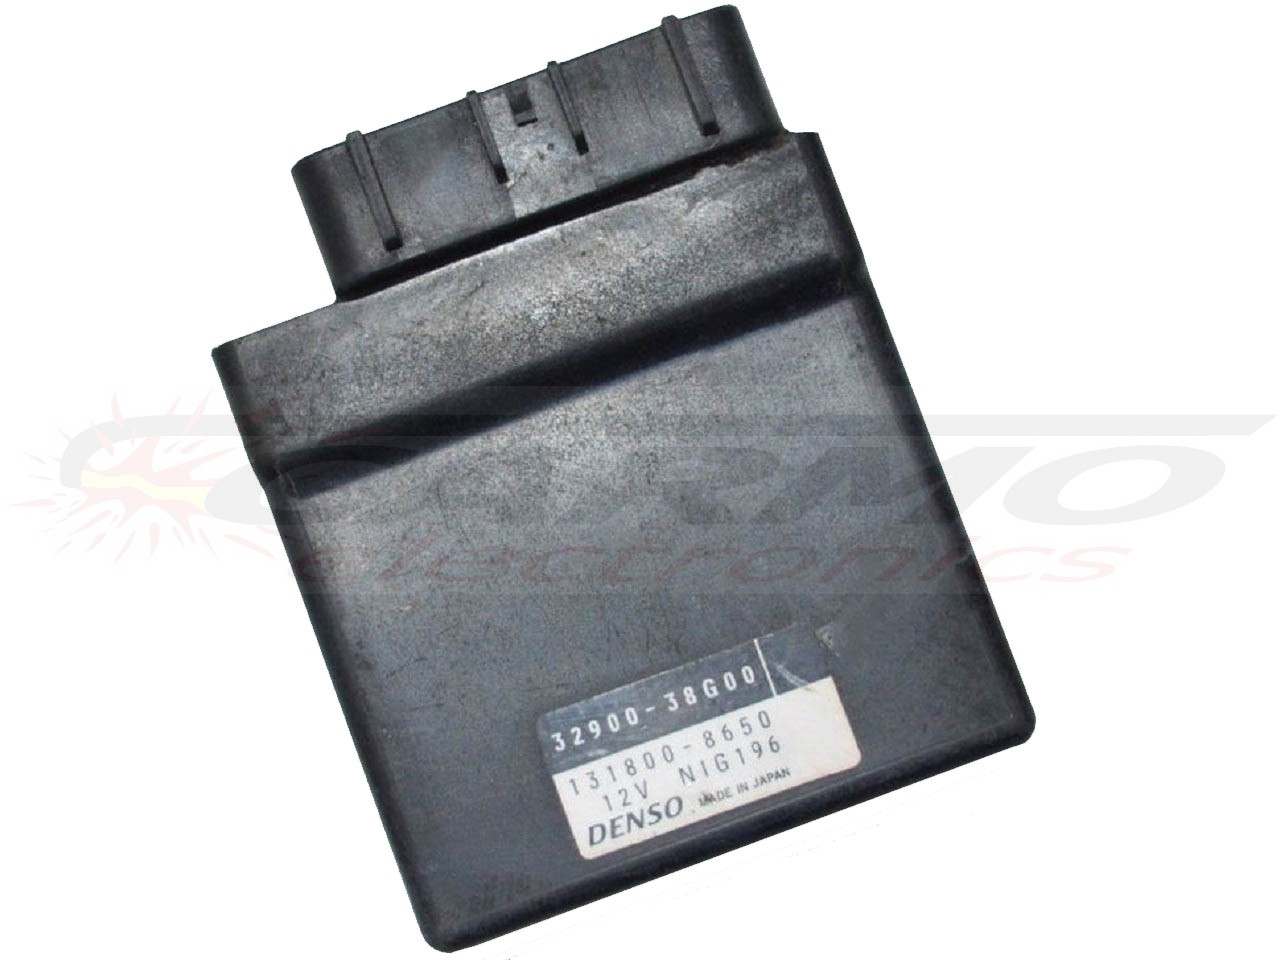 GSF650S igniter ignition module CDI TCI Box (32900-38G00, 131800-8650)